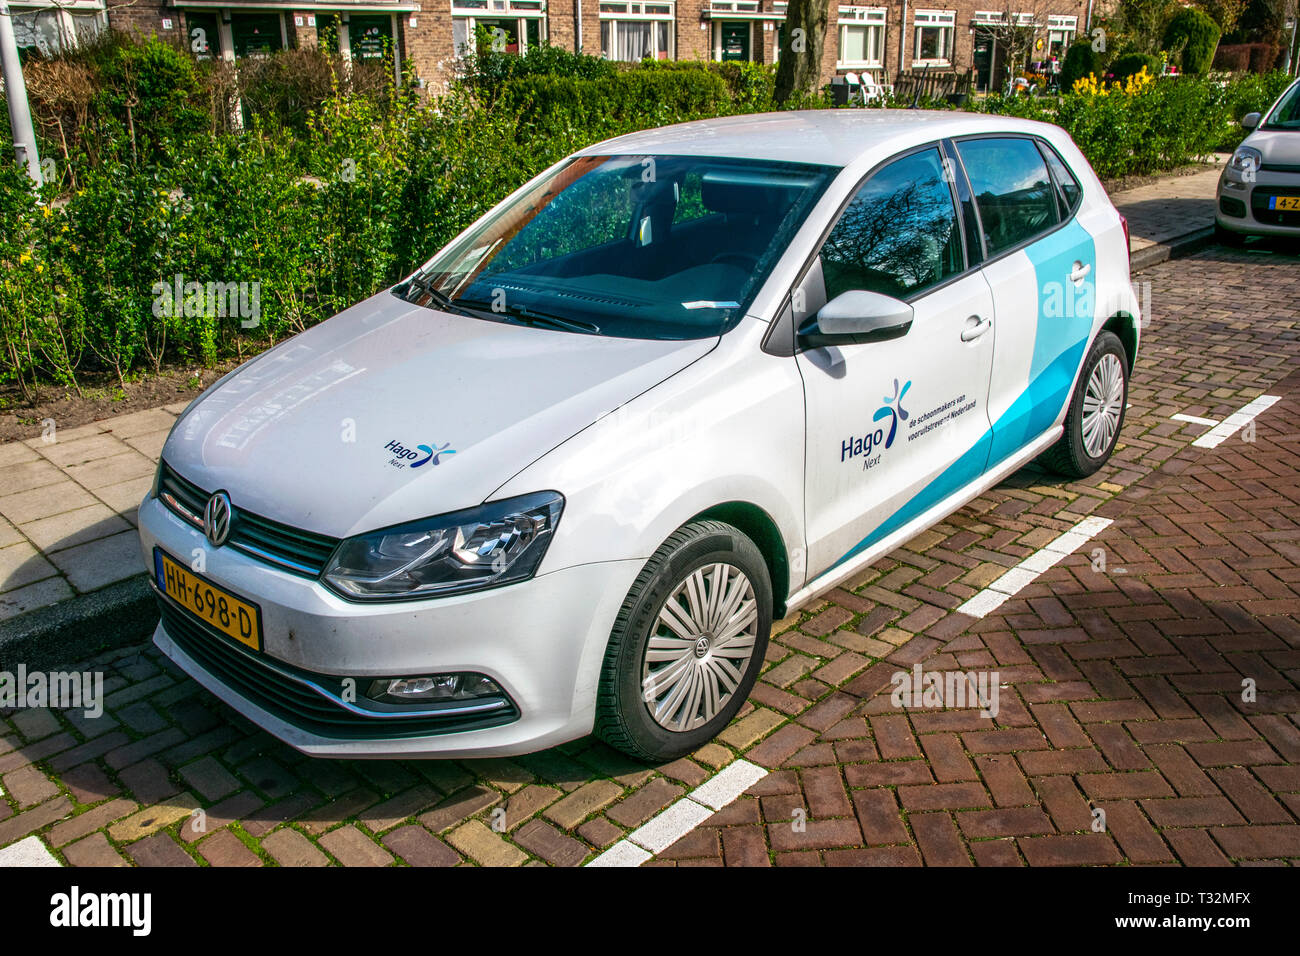 Hago Company Car At Amsterdam Th e Netherlands 2019 Stock Photo